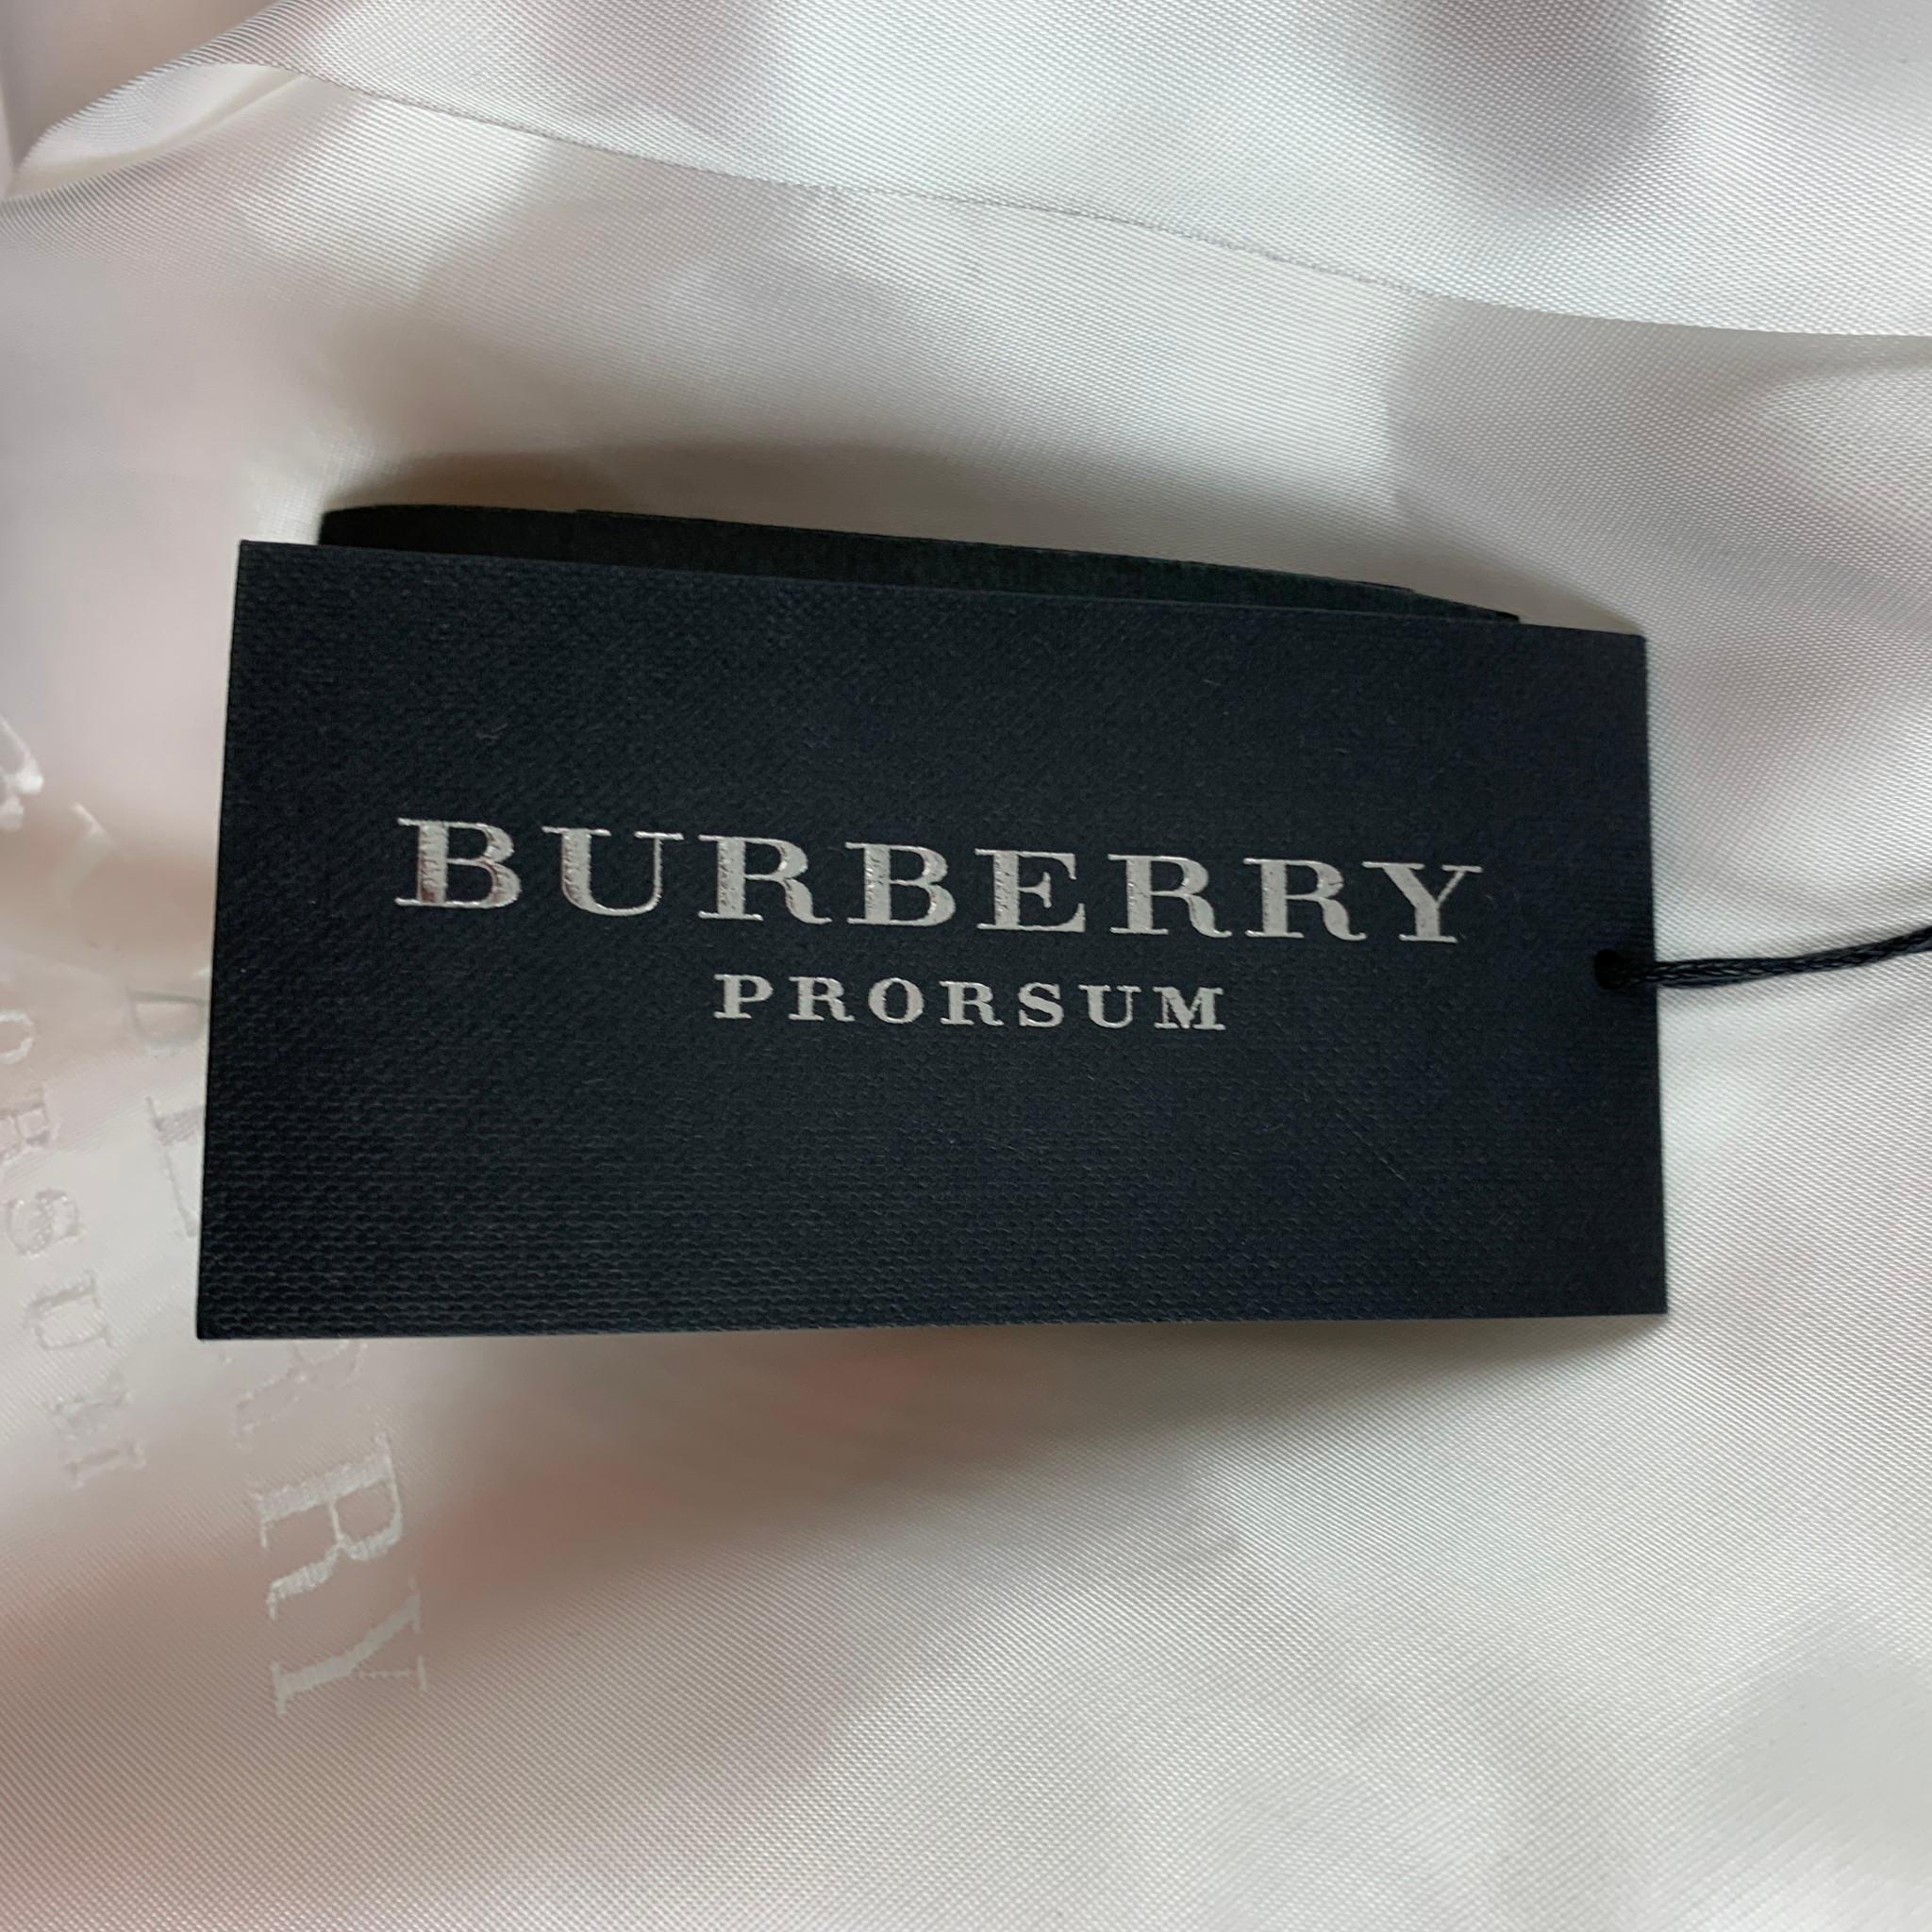 Burberry BURBERRY PRORSUM Taille 40 Coton Blanc Cran Revers Manteau Sport 